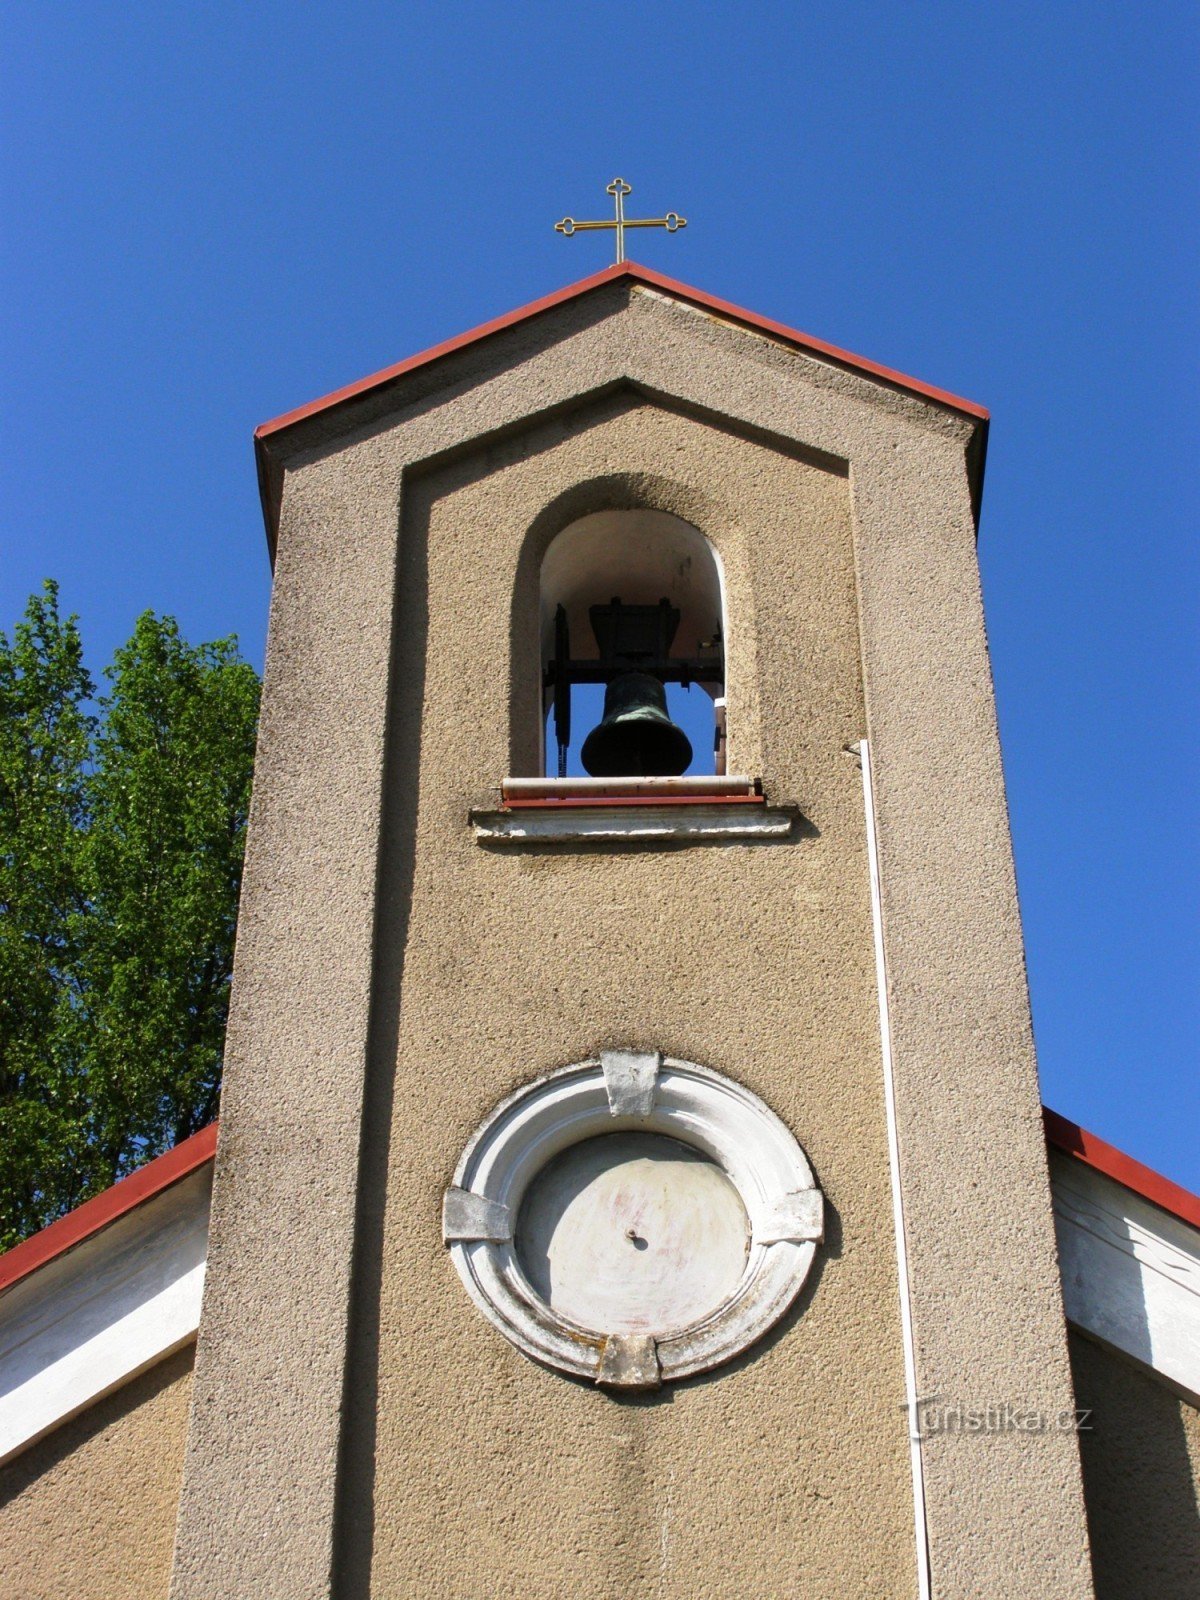 Záhornice - chapel of the Mother of God